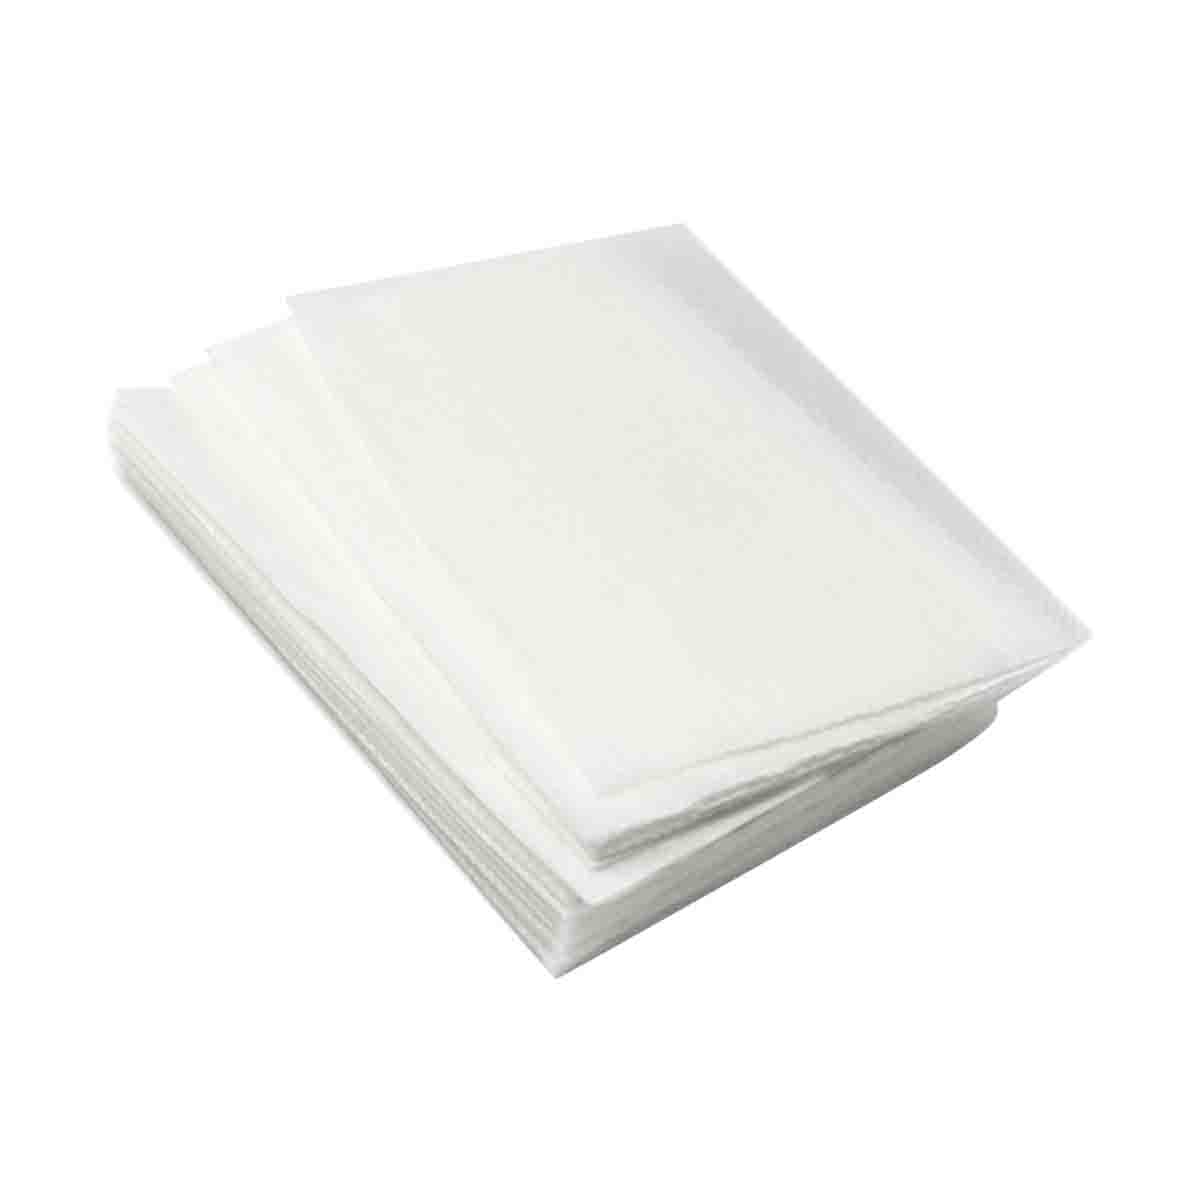 Dryer Soft Fabric Softener Sheets, Fresh Linen